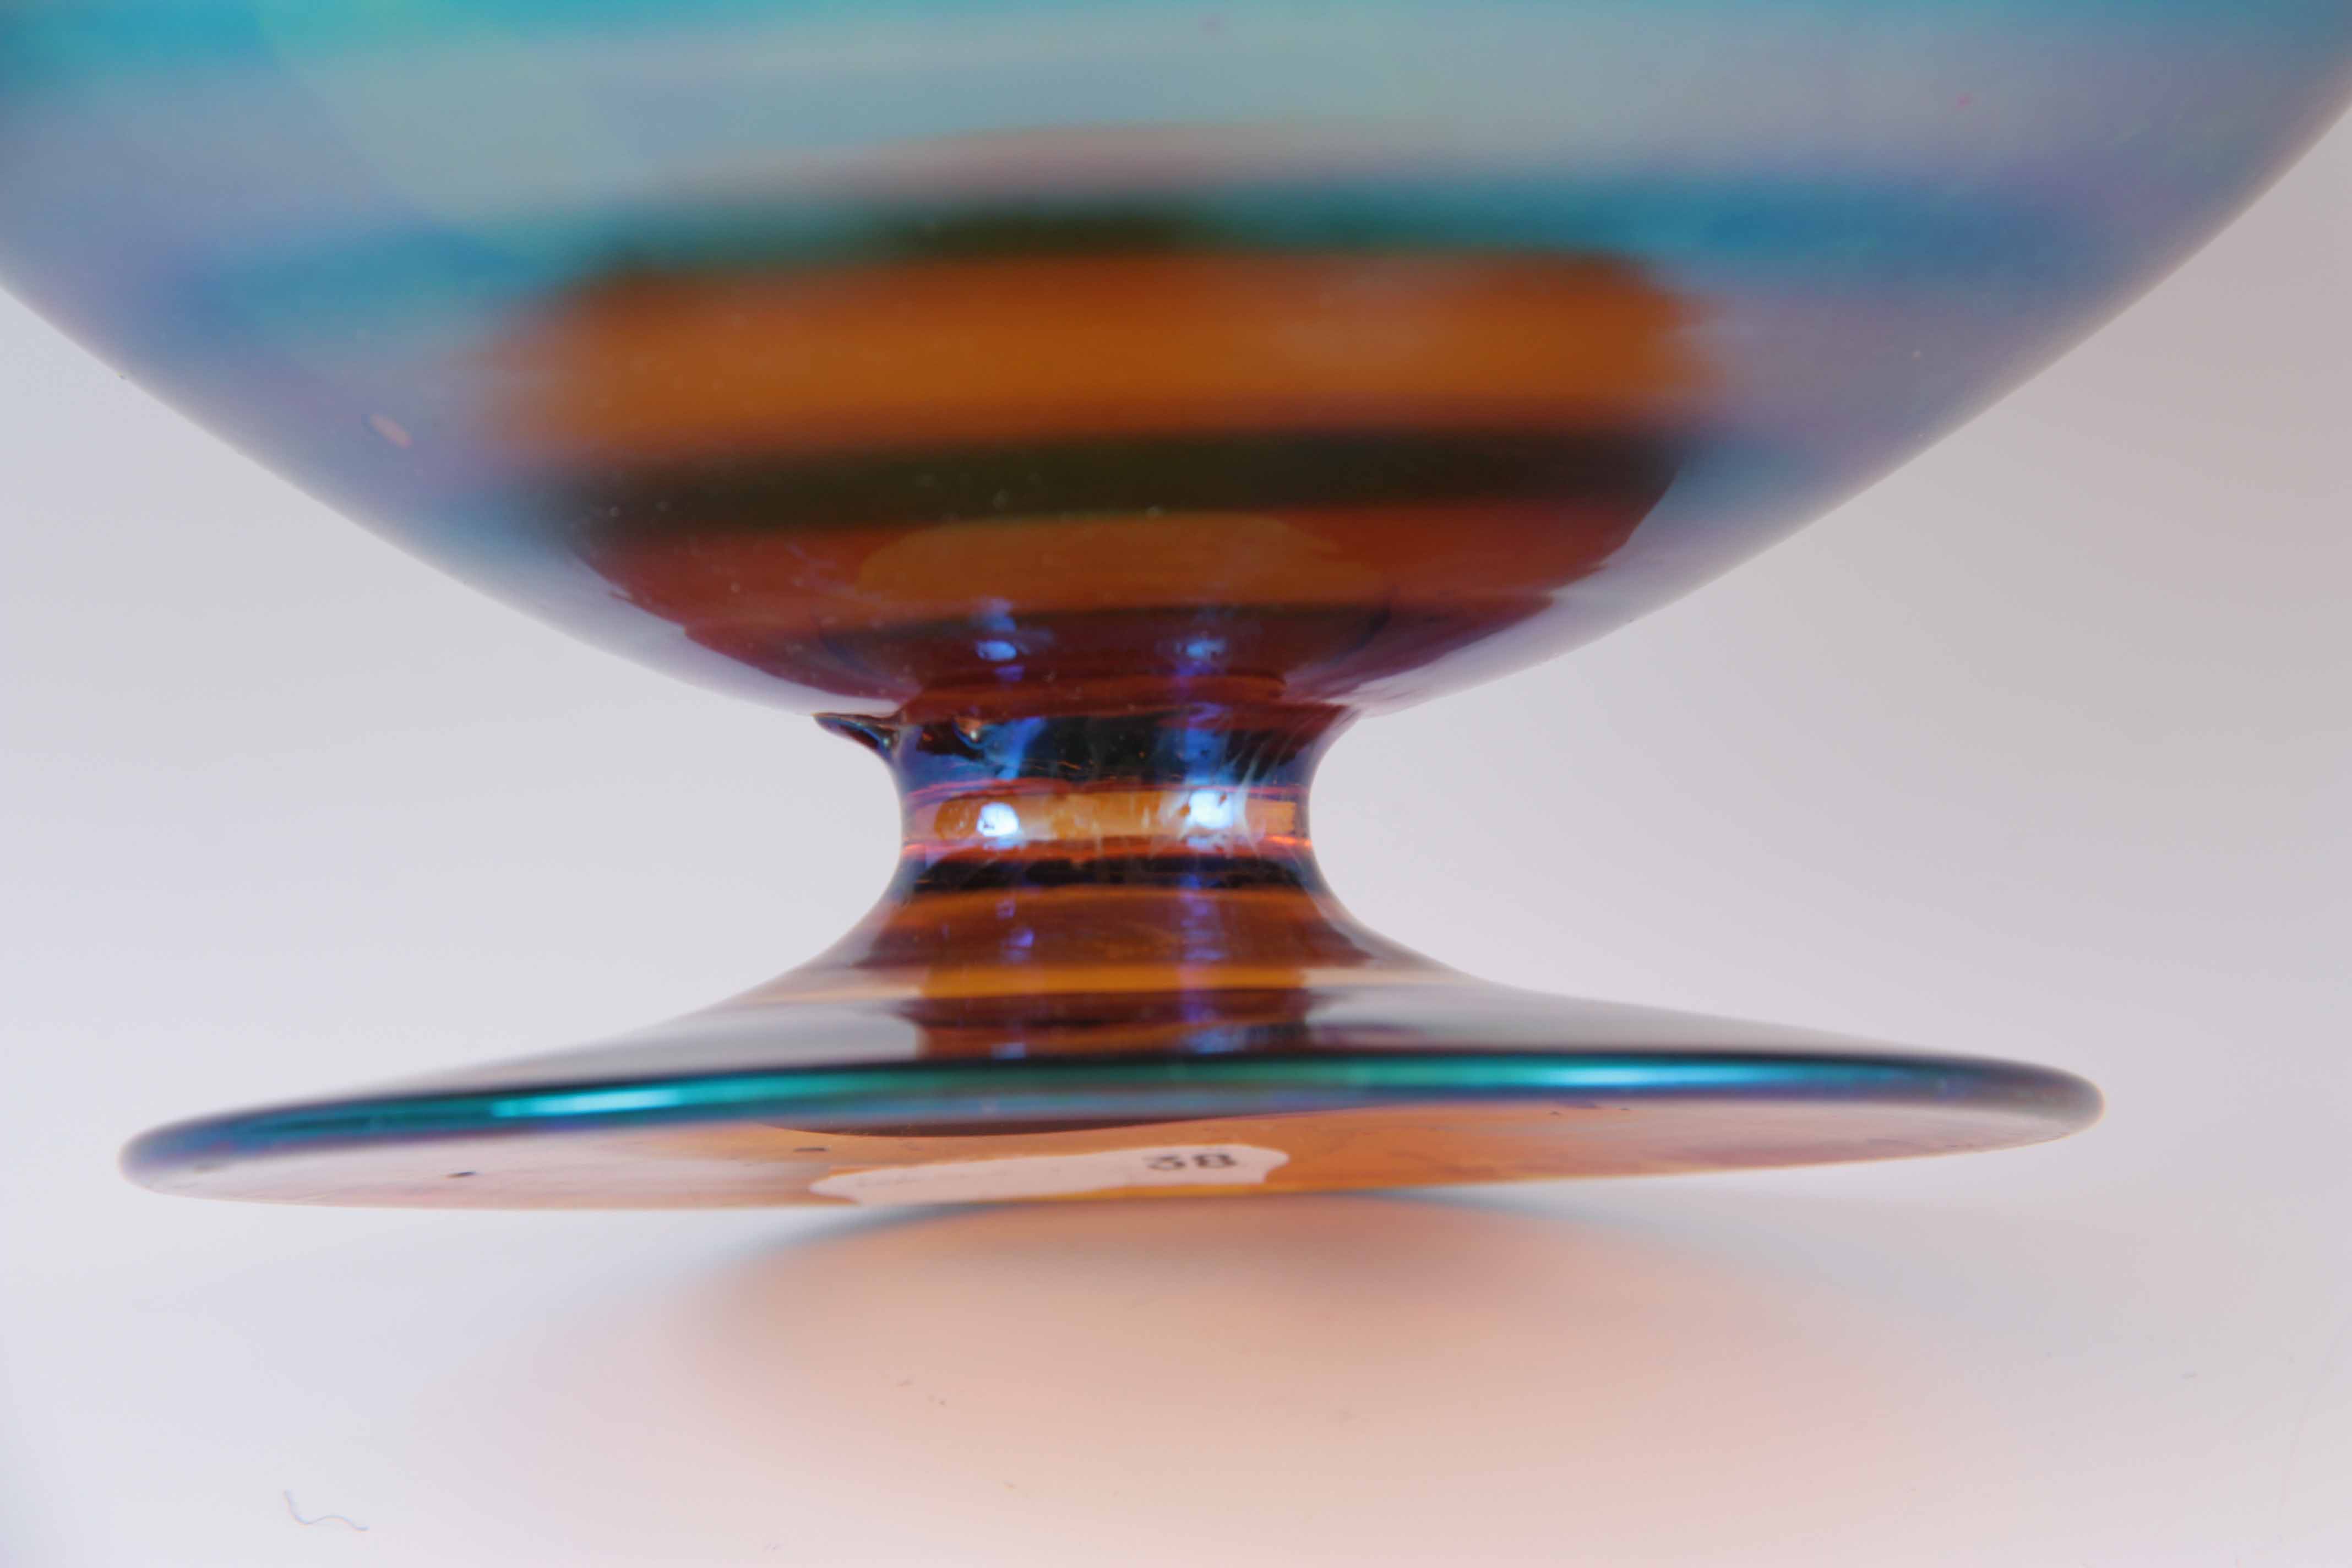 A 20TH CENTURY WMF IKORA GLASS IRIDESCENT FOOTED BOWL BY KARL WIEDEMANN 11cm high, 28cm diameter. - Image 4 of 5